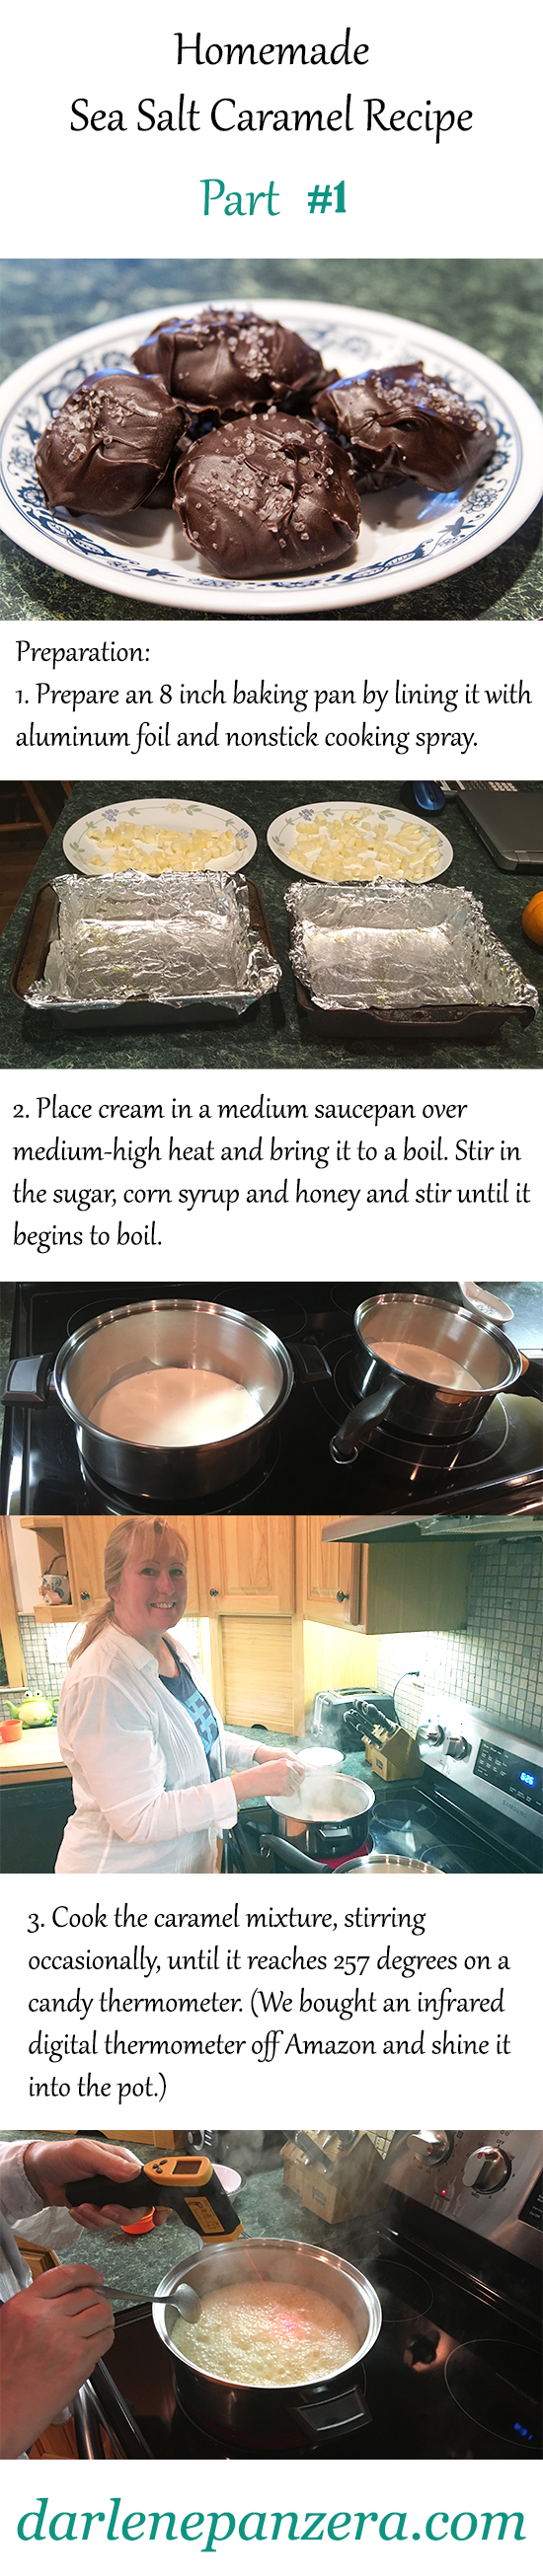 Homemade Sea Salt Caramel Recipe Part 1